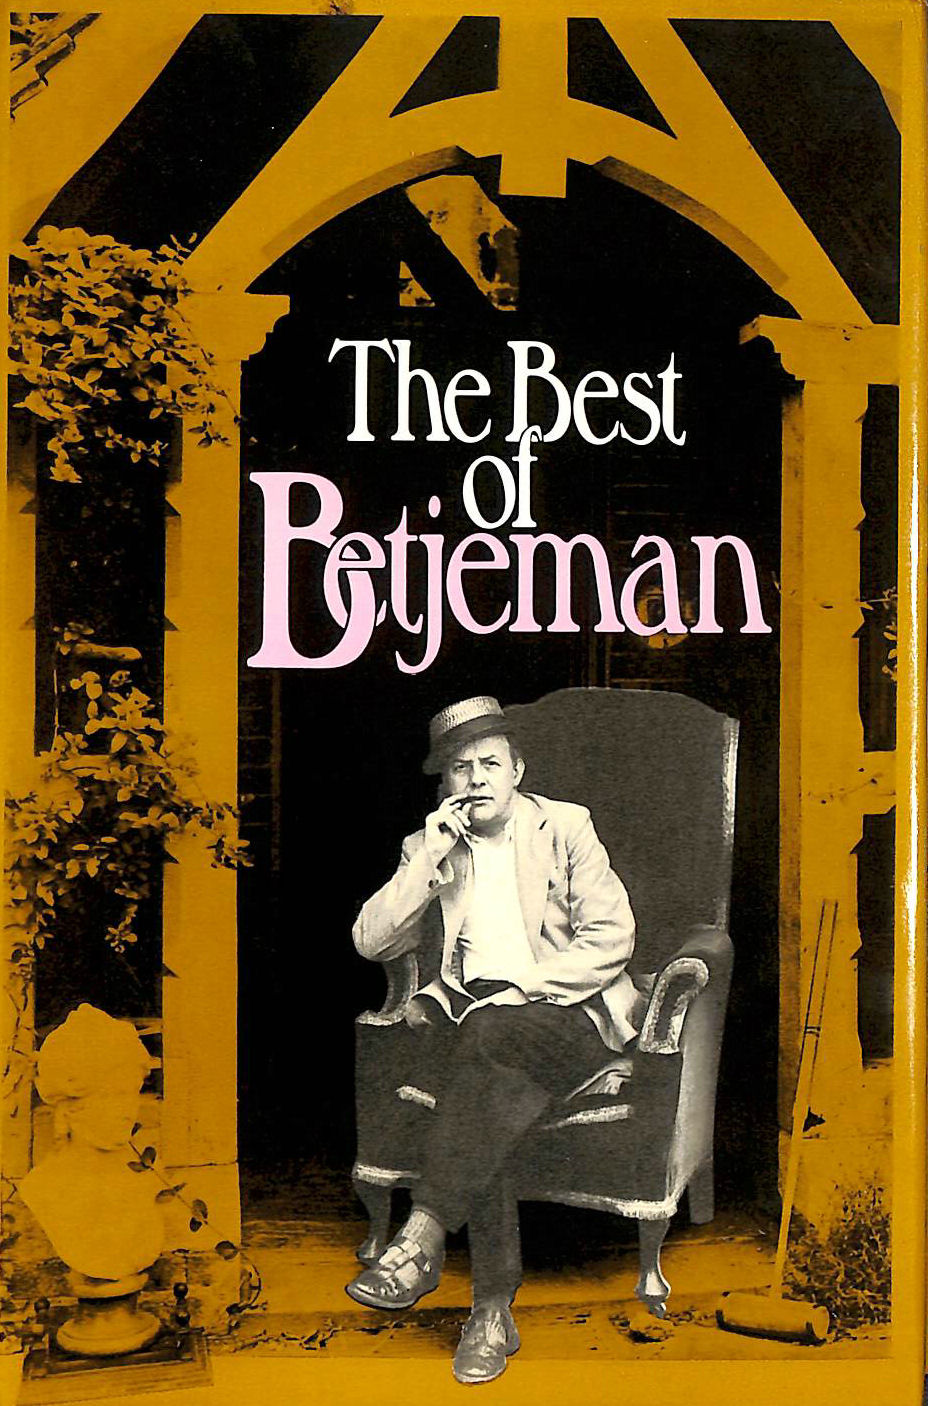 The Best of Betjeman by John Betjeman: stock image of front cover.